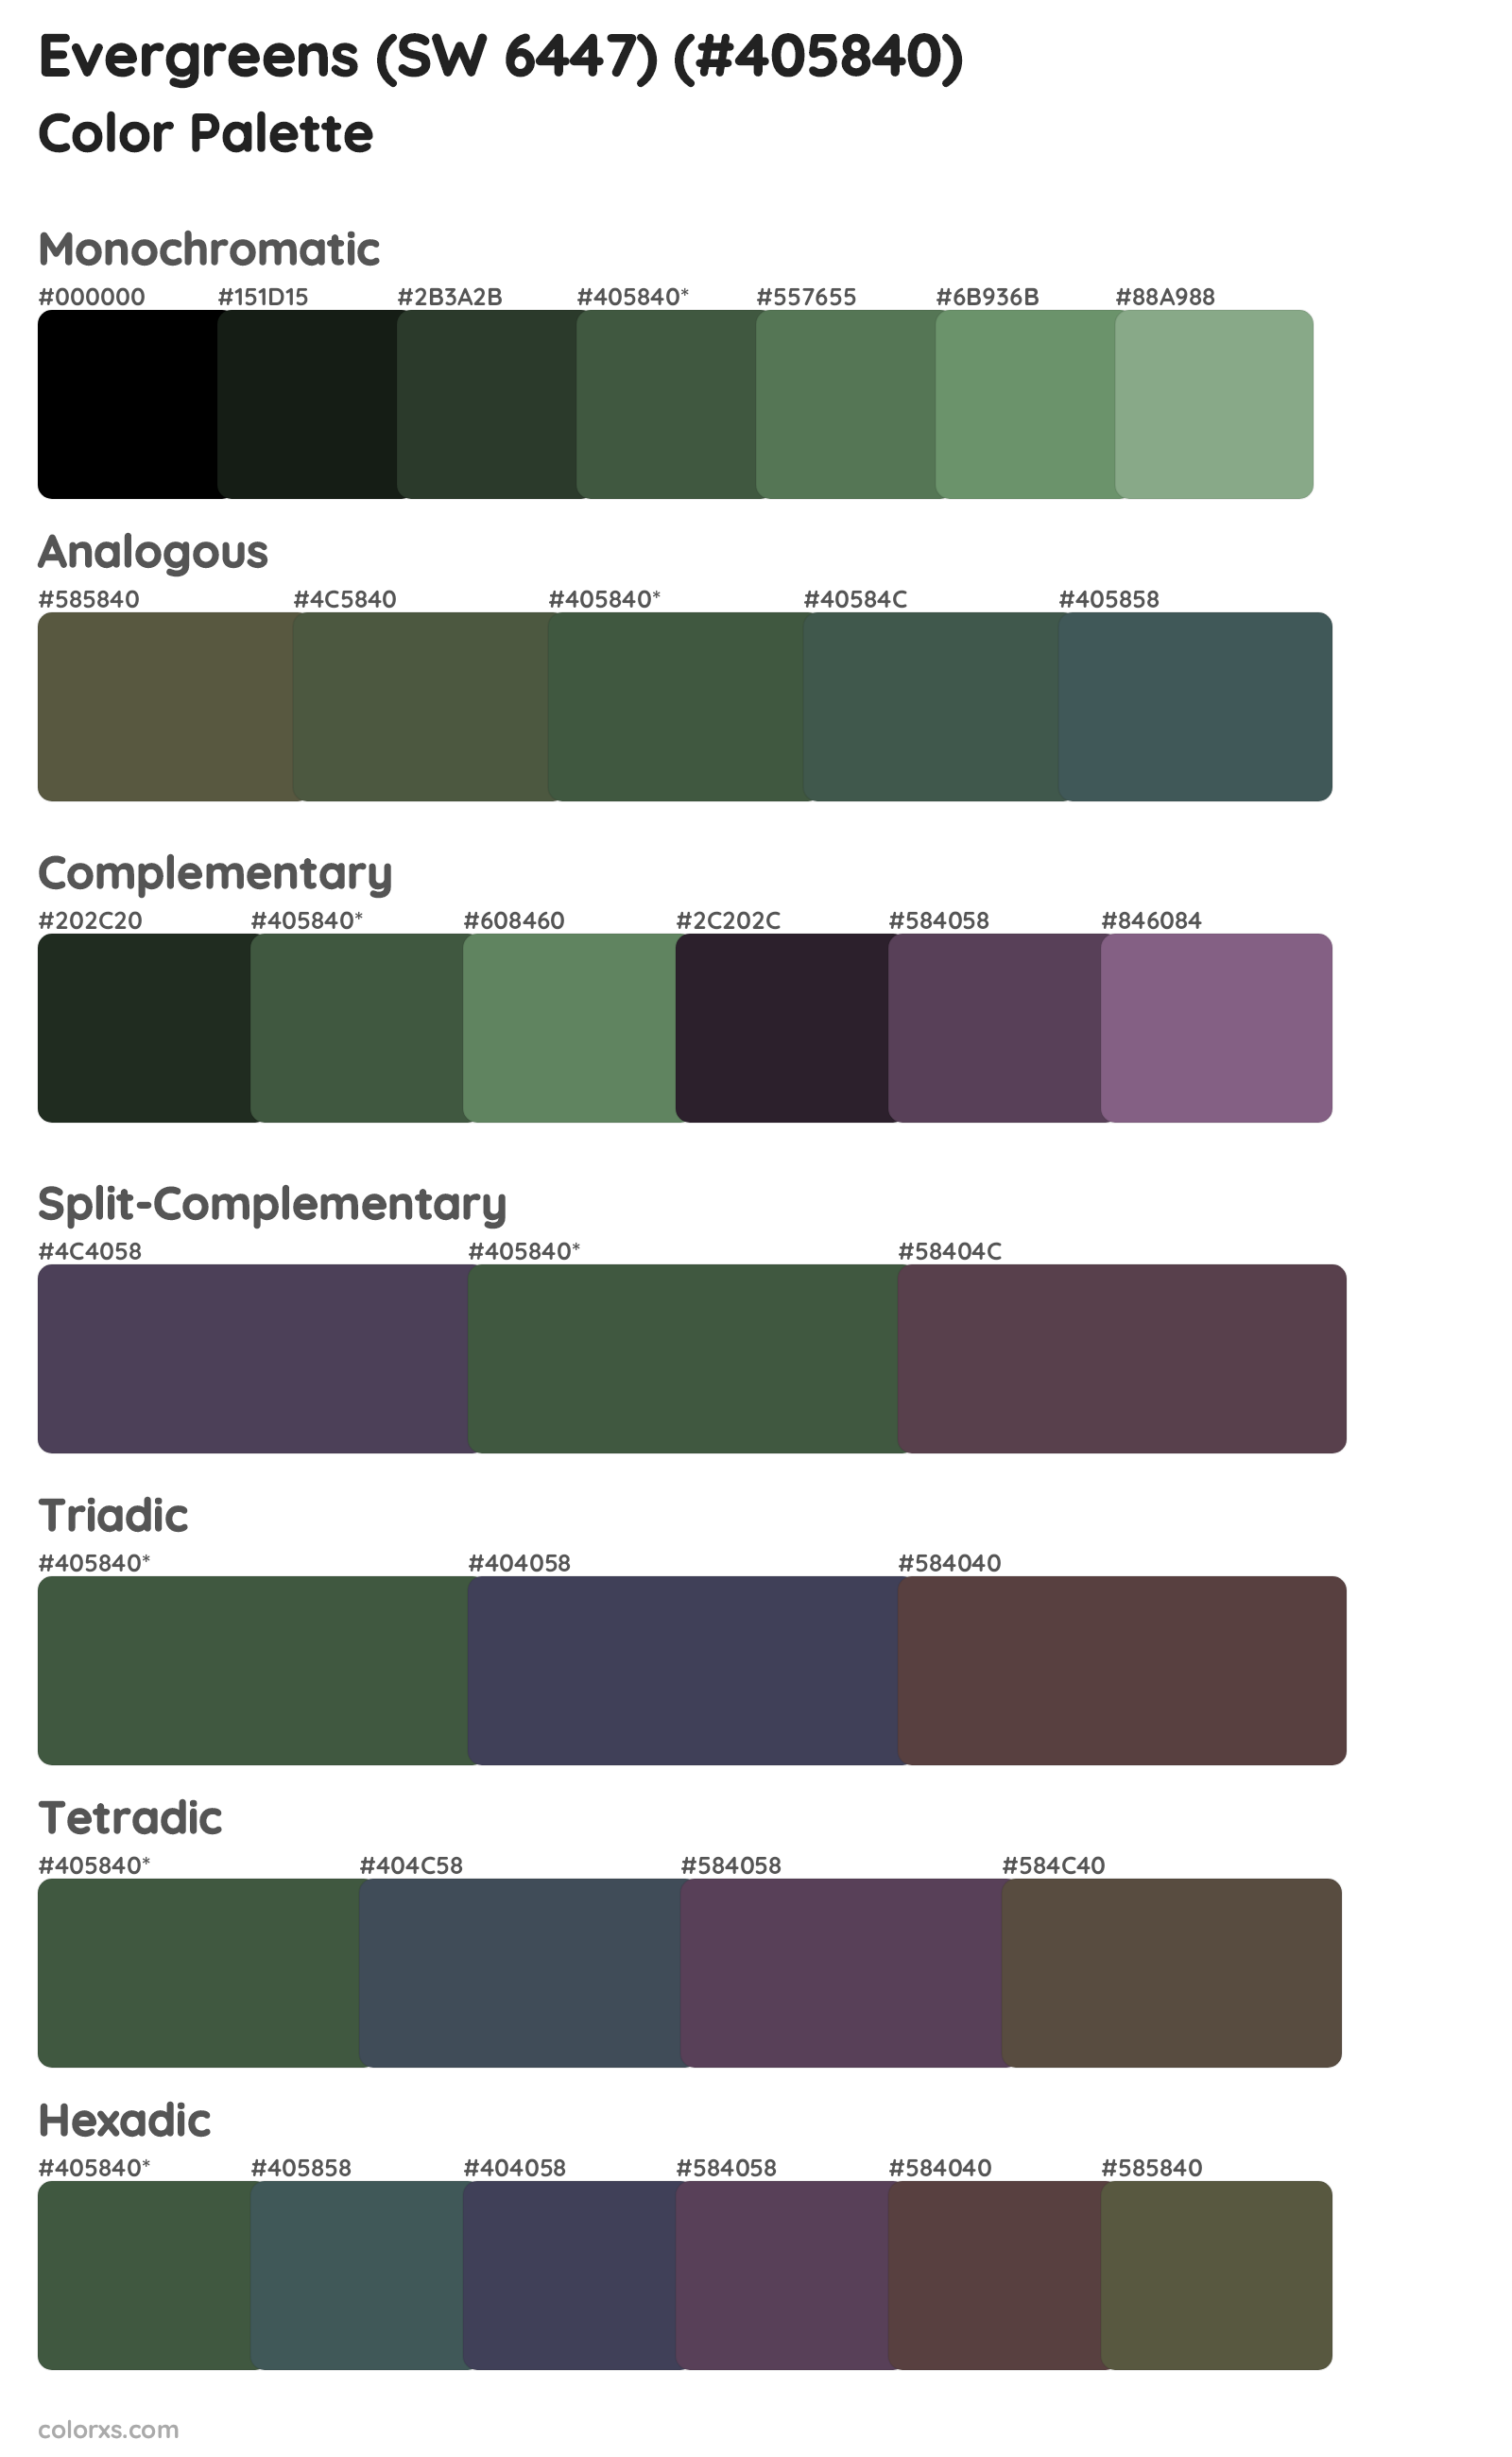 Evergreens (SW 6447) Color Scheme Palettes